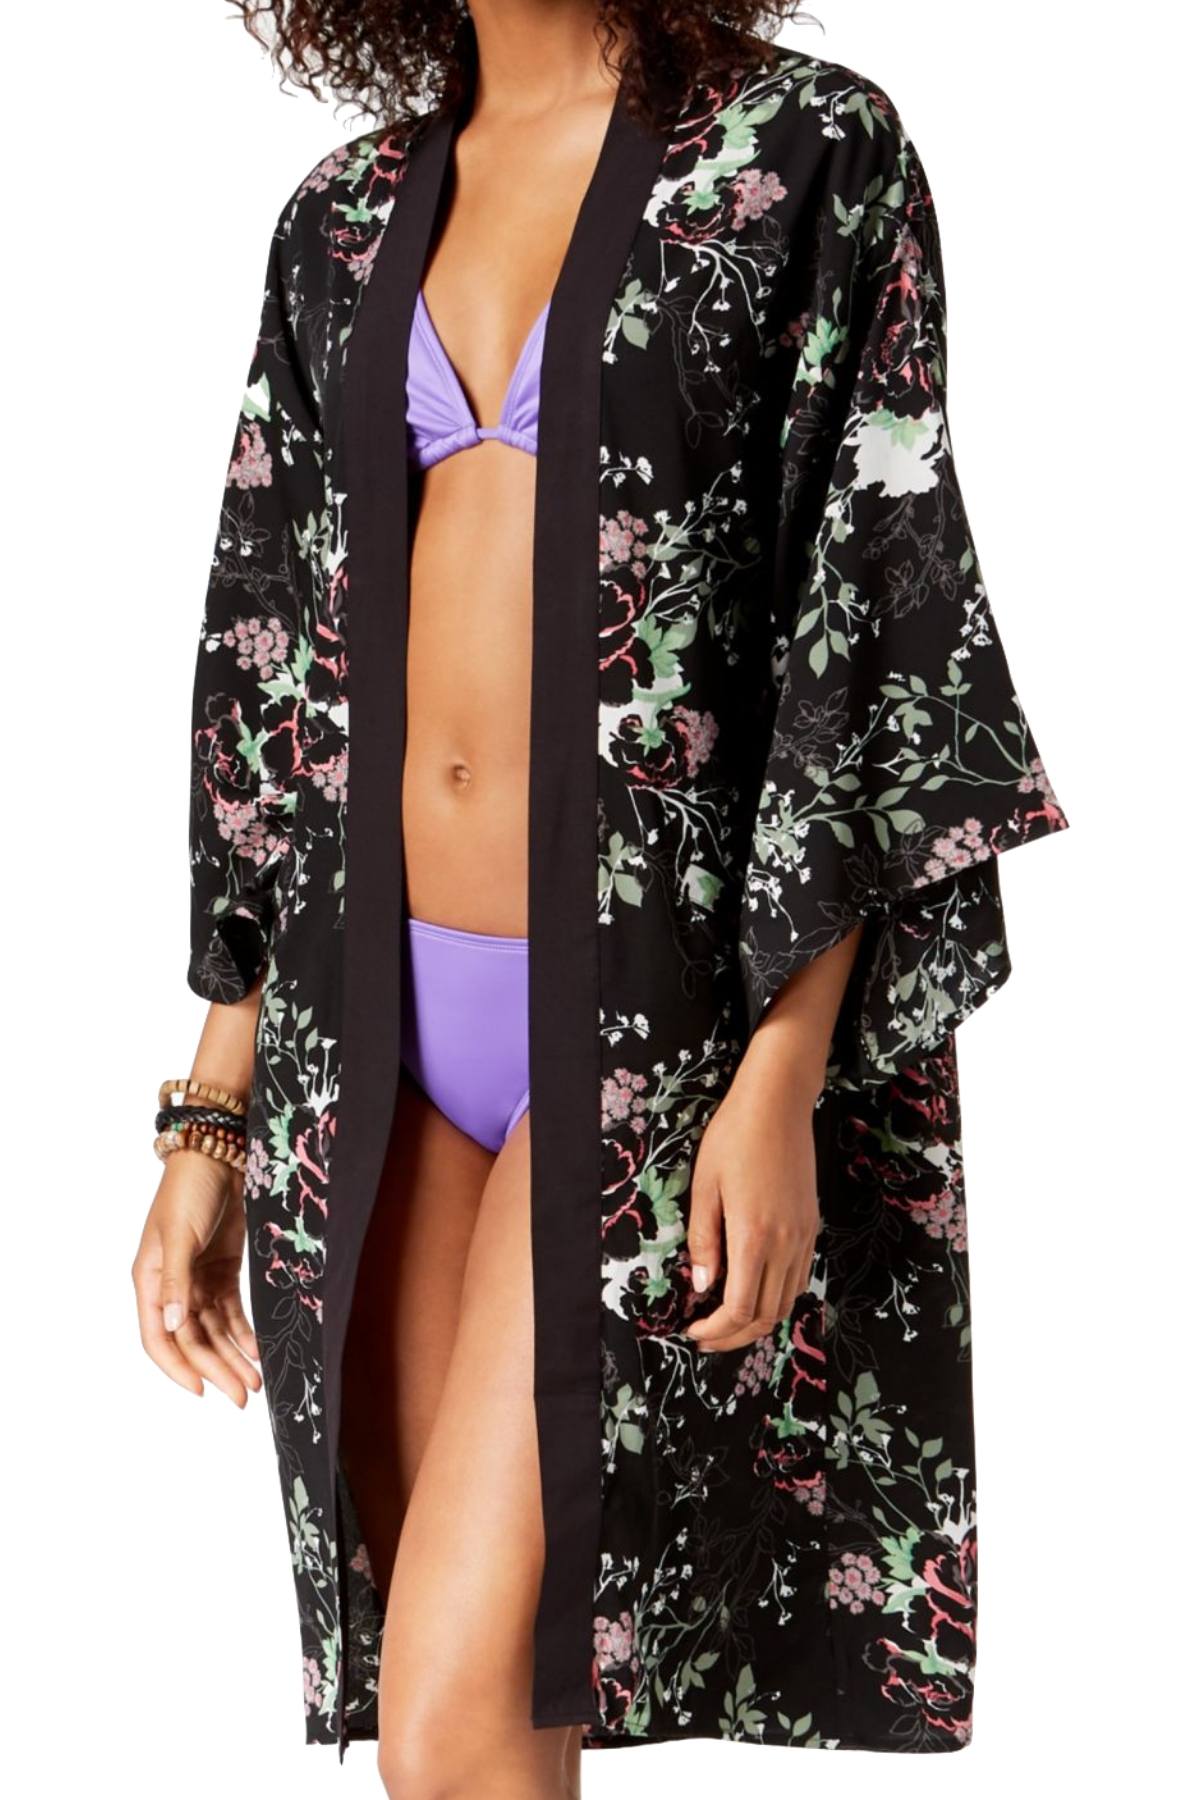 Steve Madden Black/Floral-Print Duster Kimono